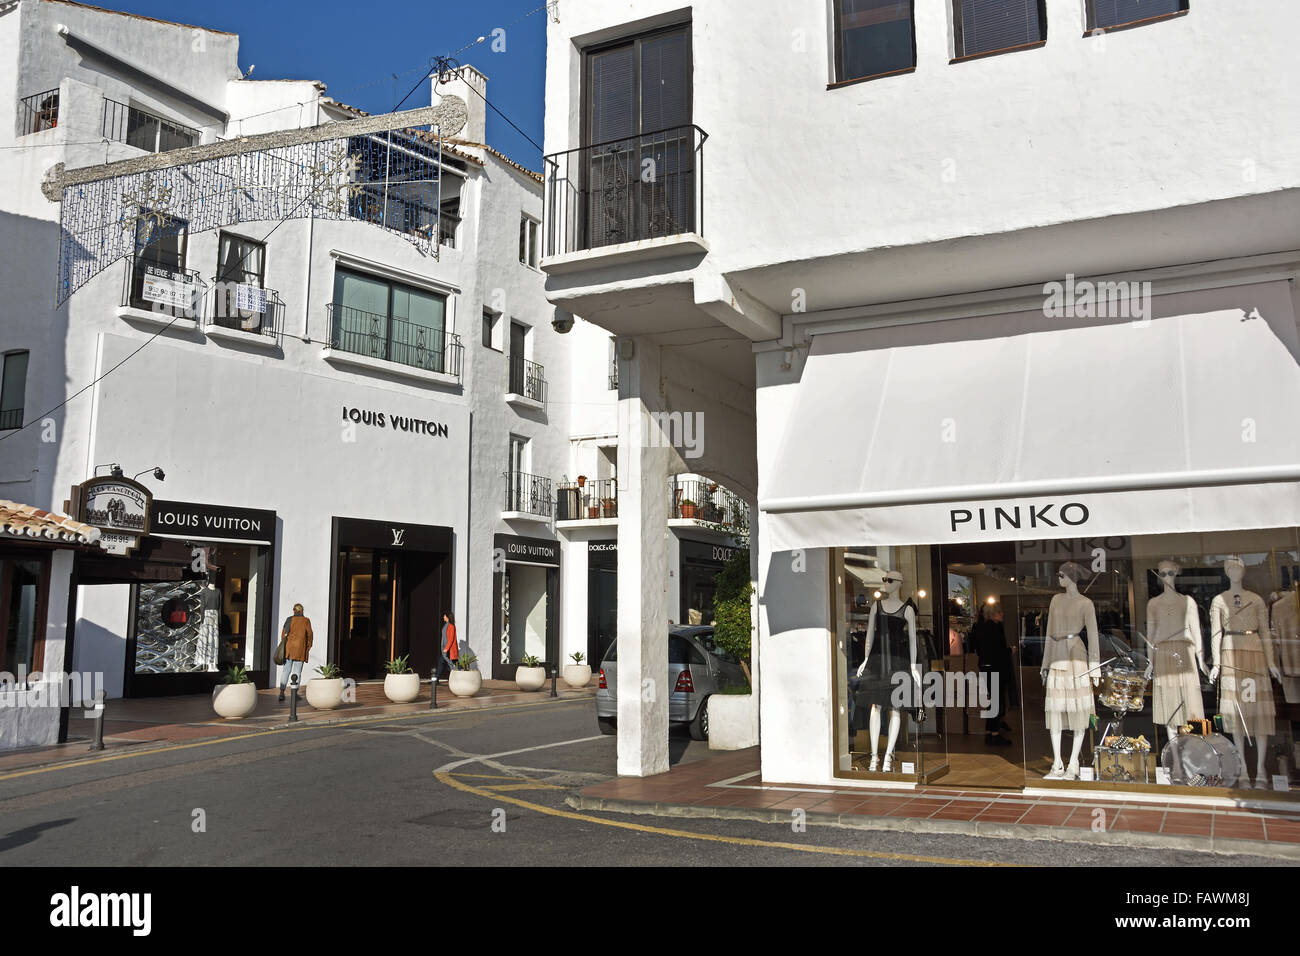 Pinko - Louis Vuitton Fashion shops Marbella Spanish Spain Andalusia Stock Photo, Royalty Free ...